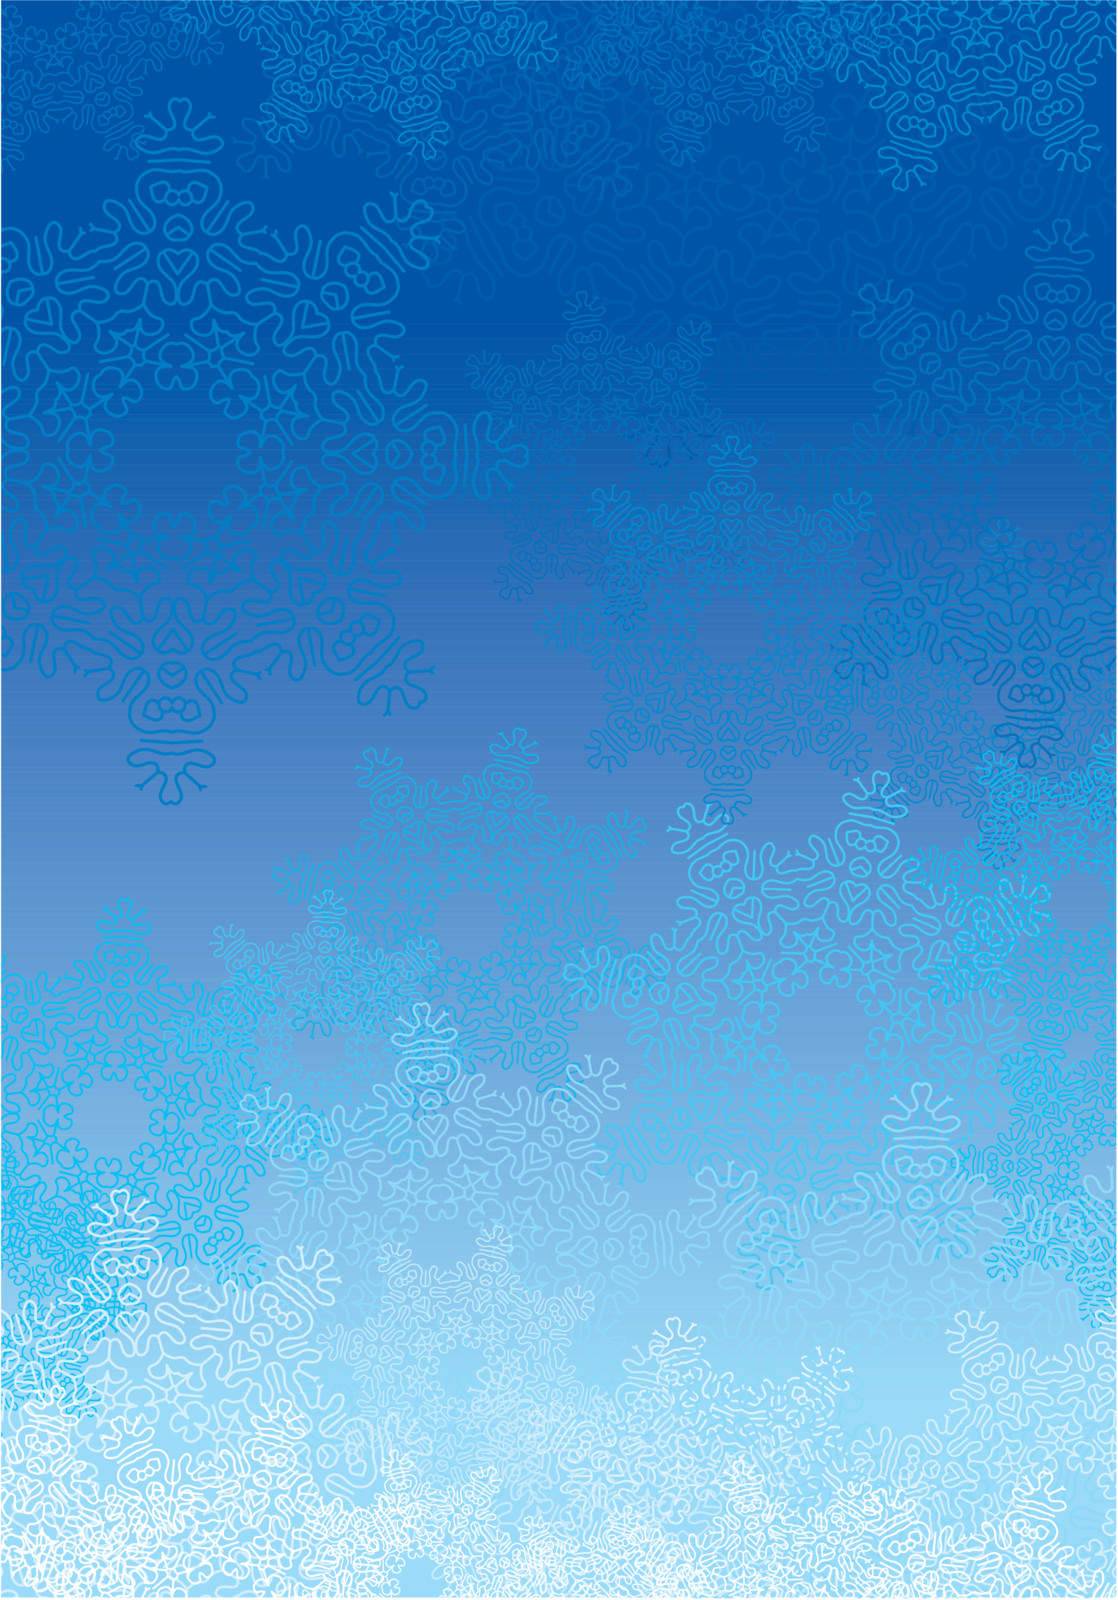 Snowflake Background by bonathos